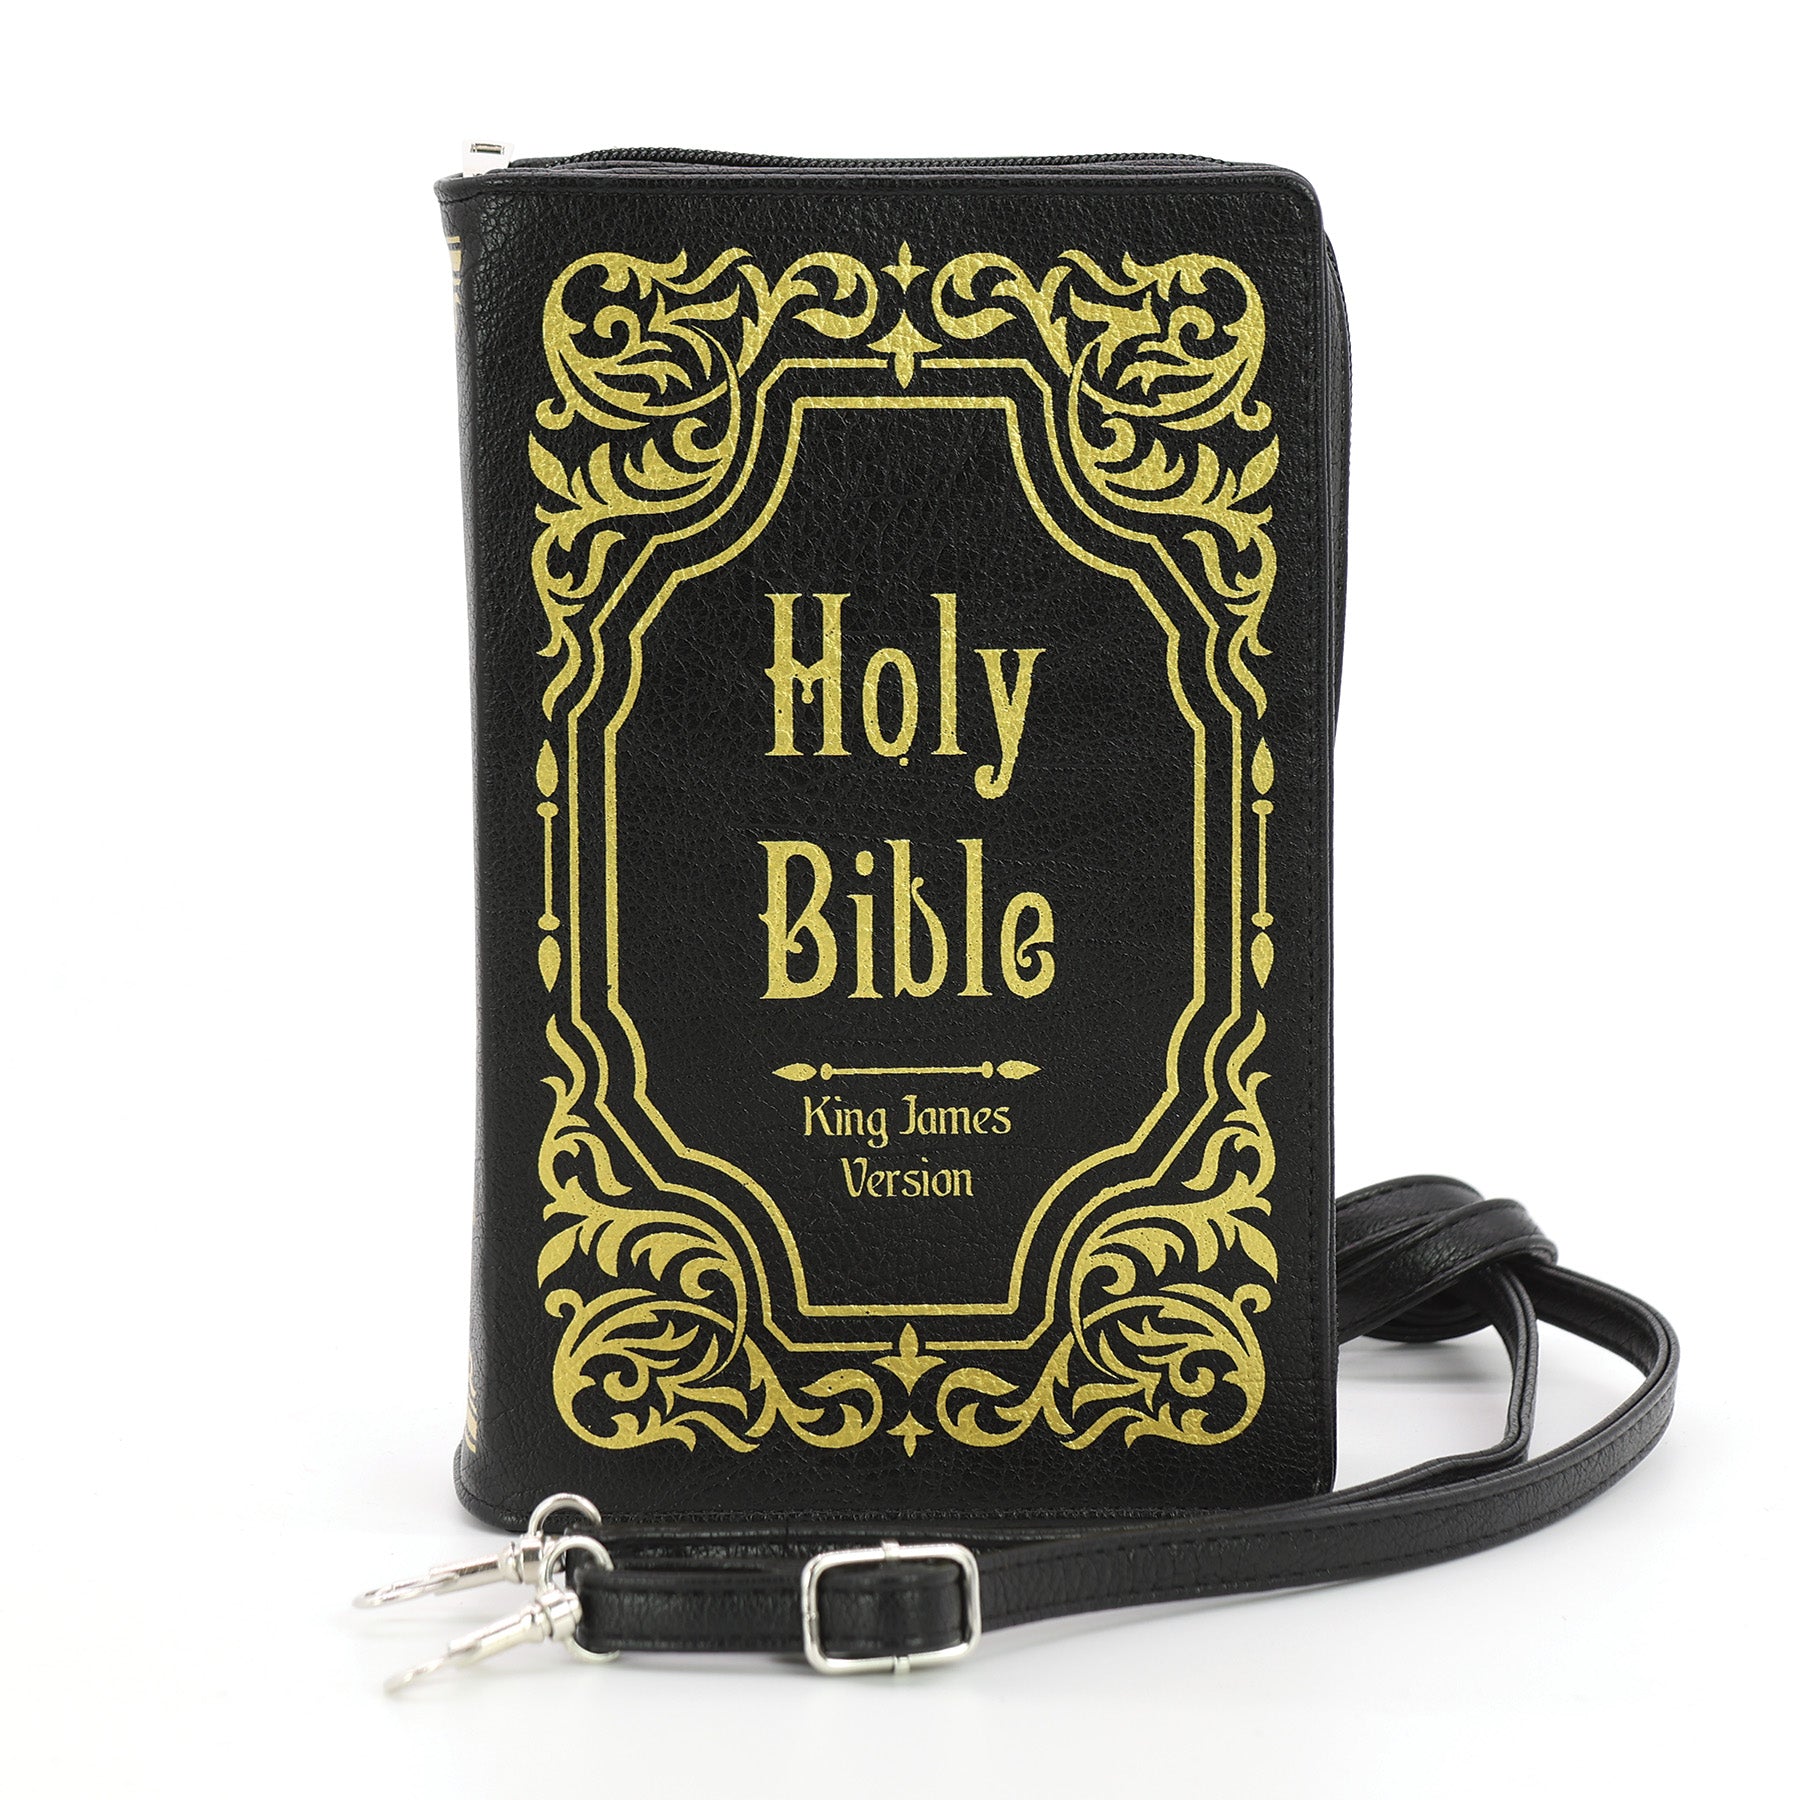 Holy Bible KJV Book Clutch Bag in Vinyl